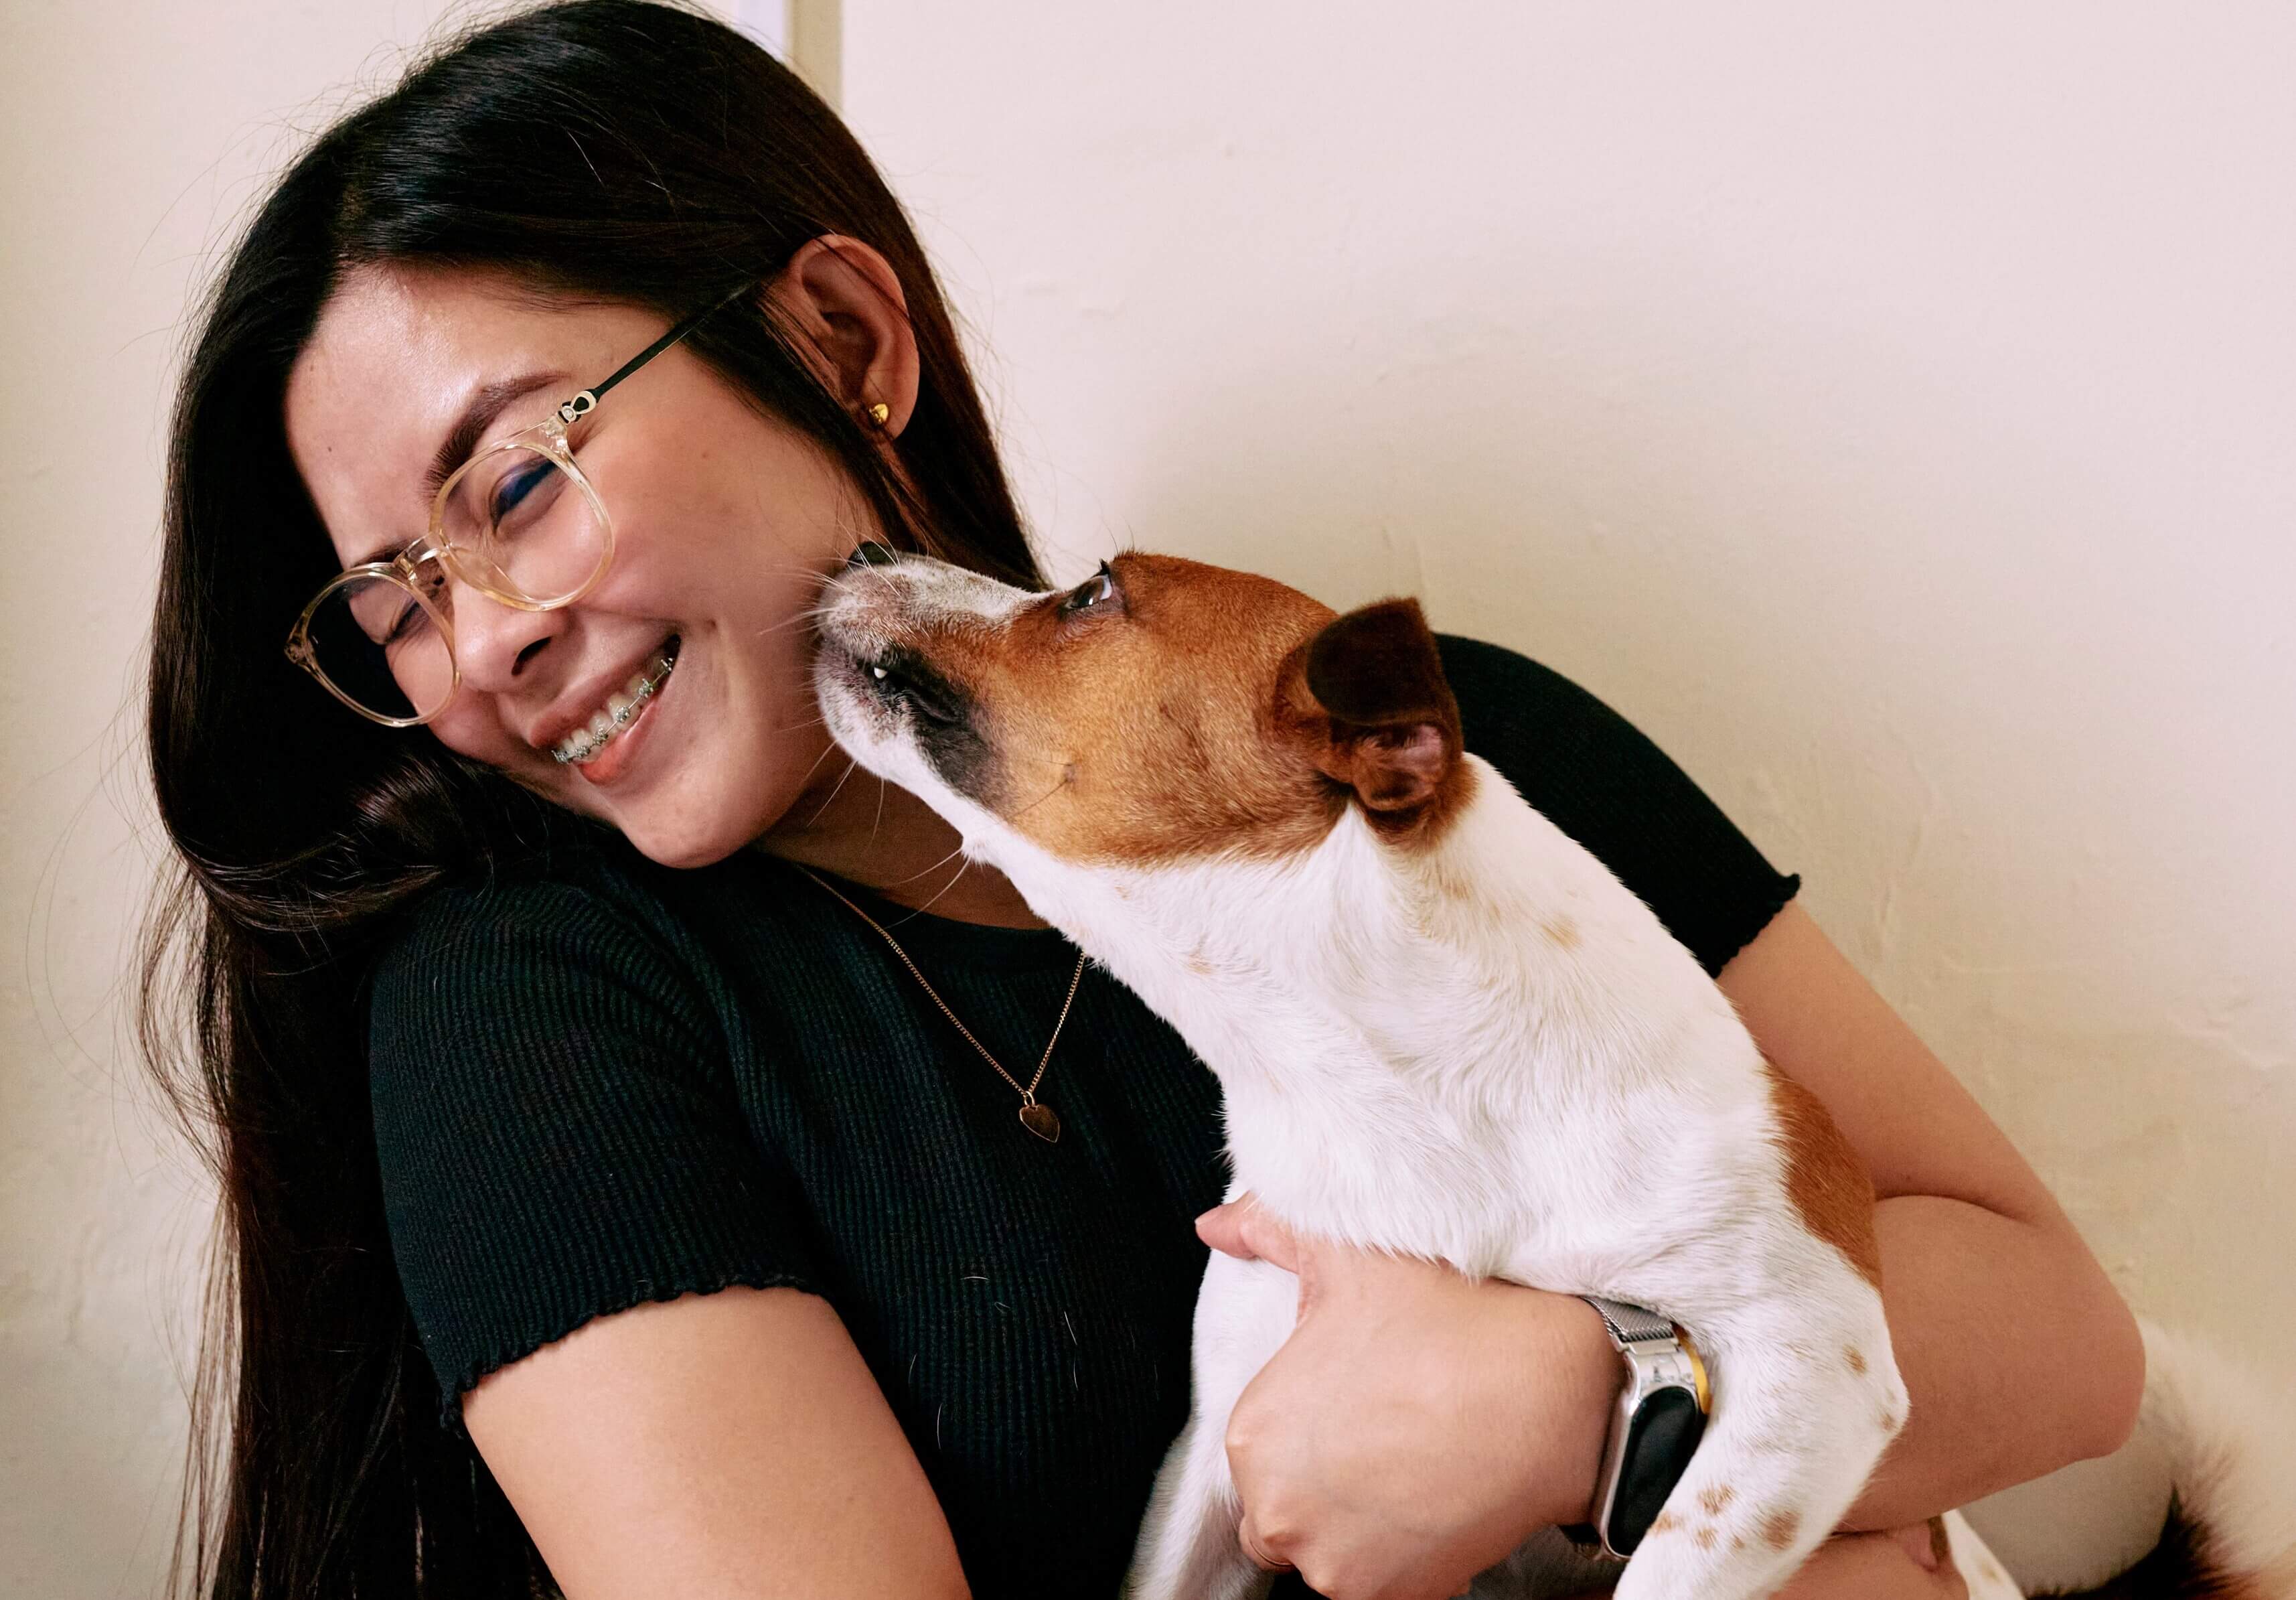 Joyful pet sitter shares a warm hug with her furry companion, showcasing a heartwarming bond between human and dog